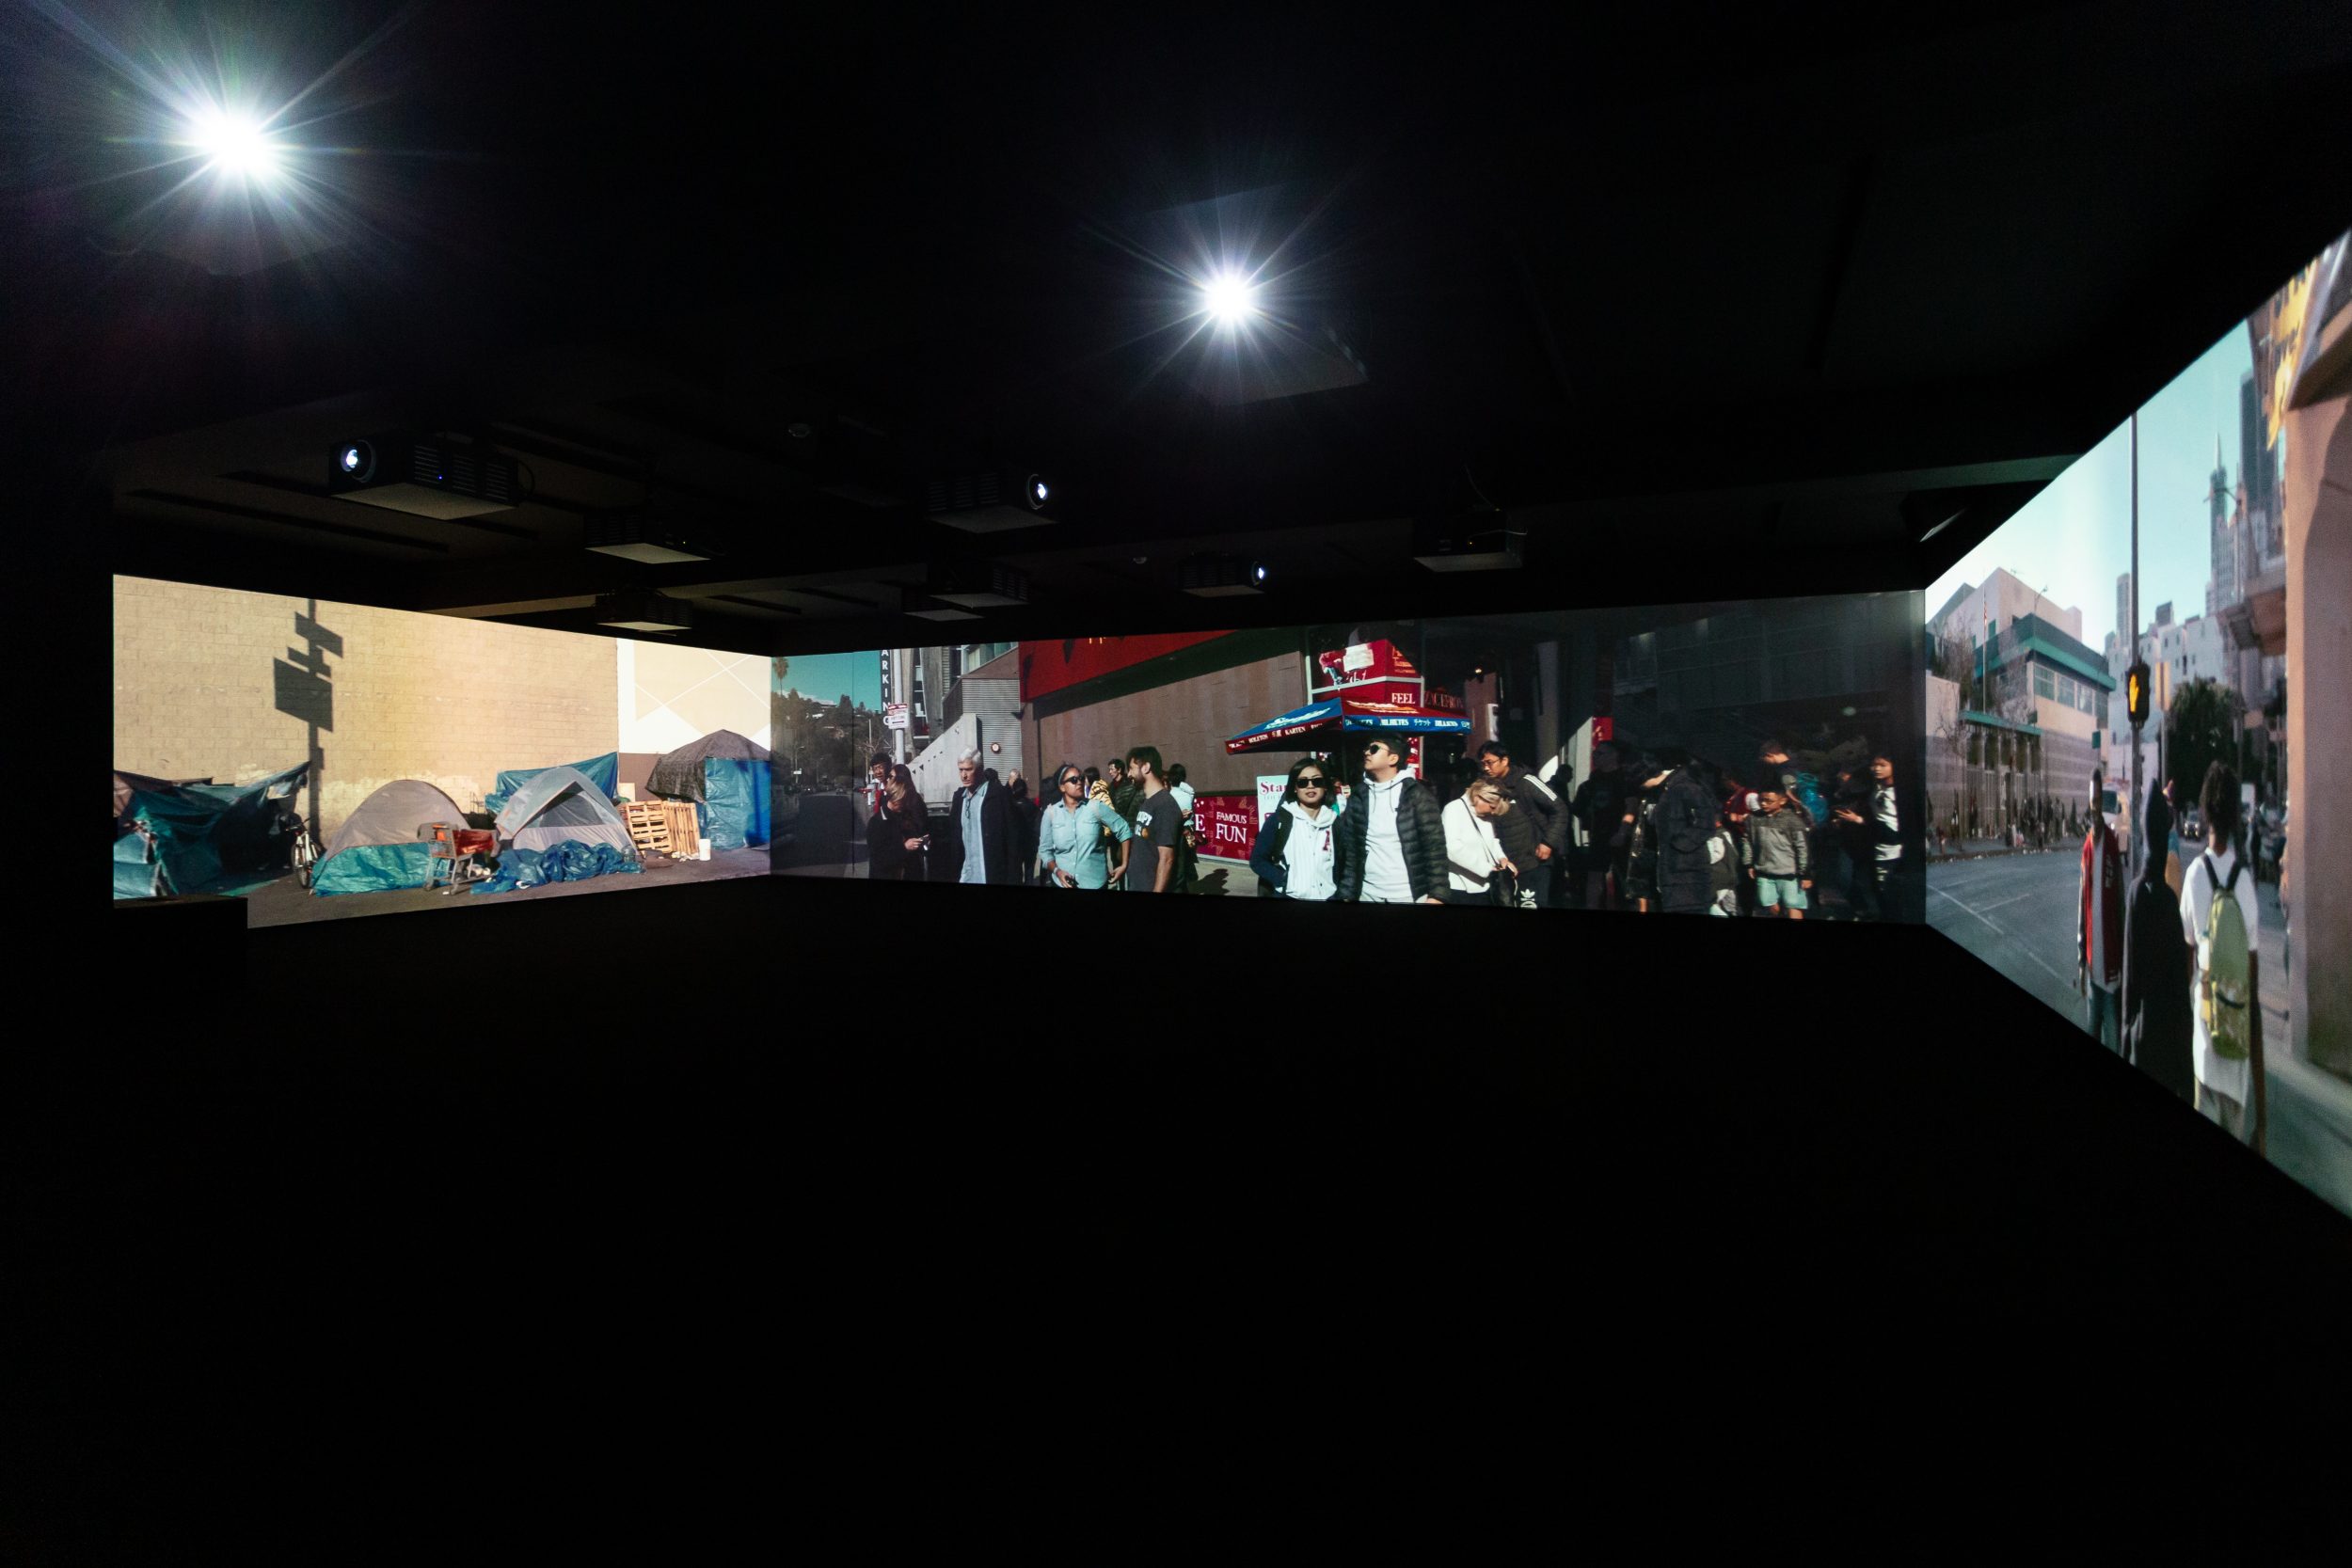 Exhibition view: Fenestra
Alexandre Farto aka Vhils
Galeria Vera Cortês
2021
